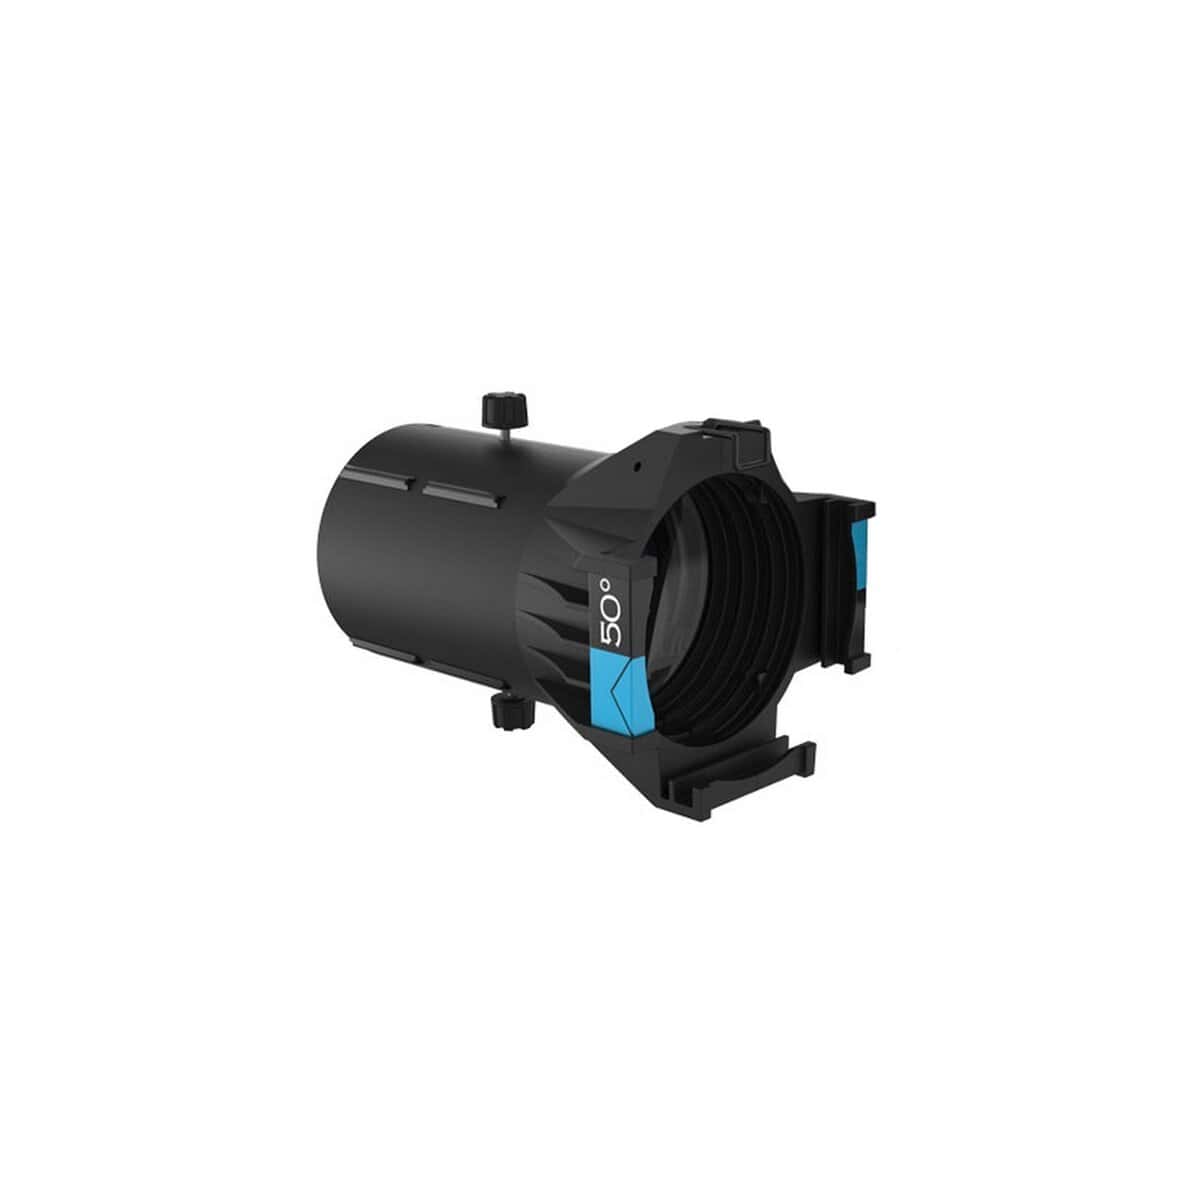 Chauvet Professional OHDLENS50 Ovation Ellipsoidal HD Lens Tube, 50-Degree